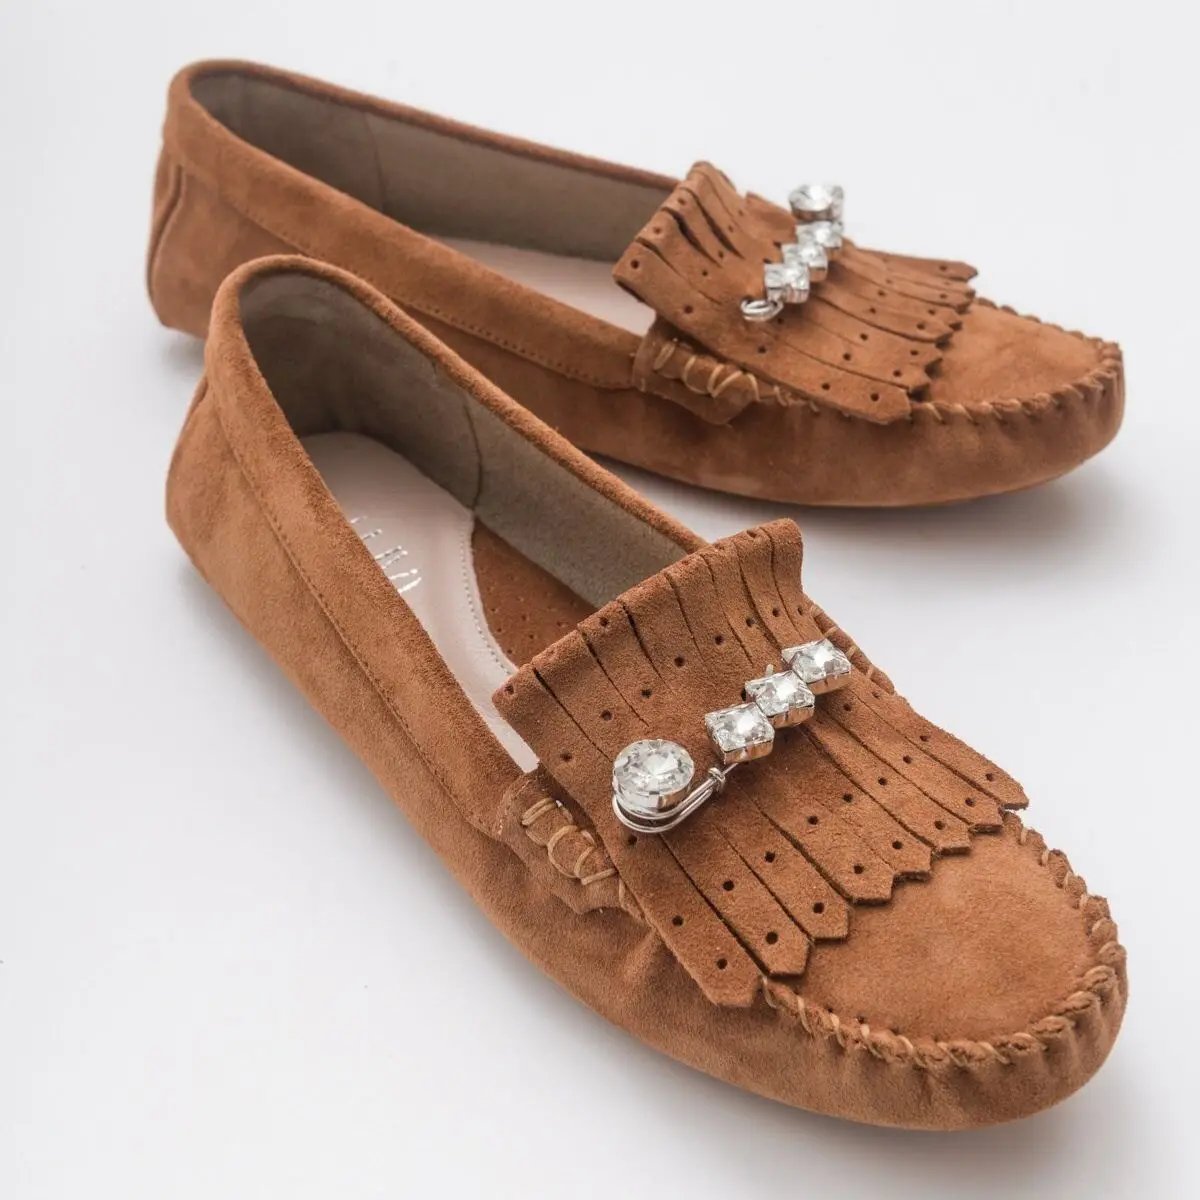 Poshnmore Benoıt Genuine Leather Suede Rubber Lightweight Flat Sole Women's Flat Shoes Stone Sand DenimBlue DriedRose Tan Khaki